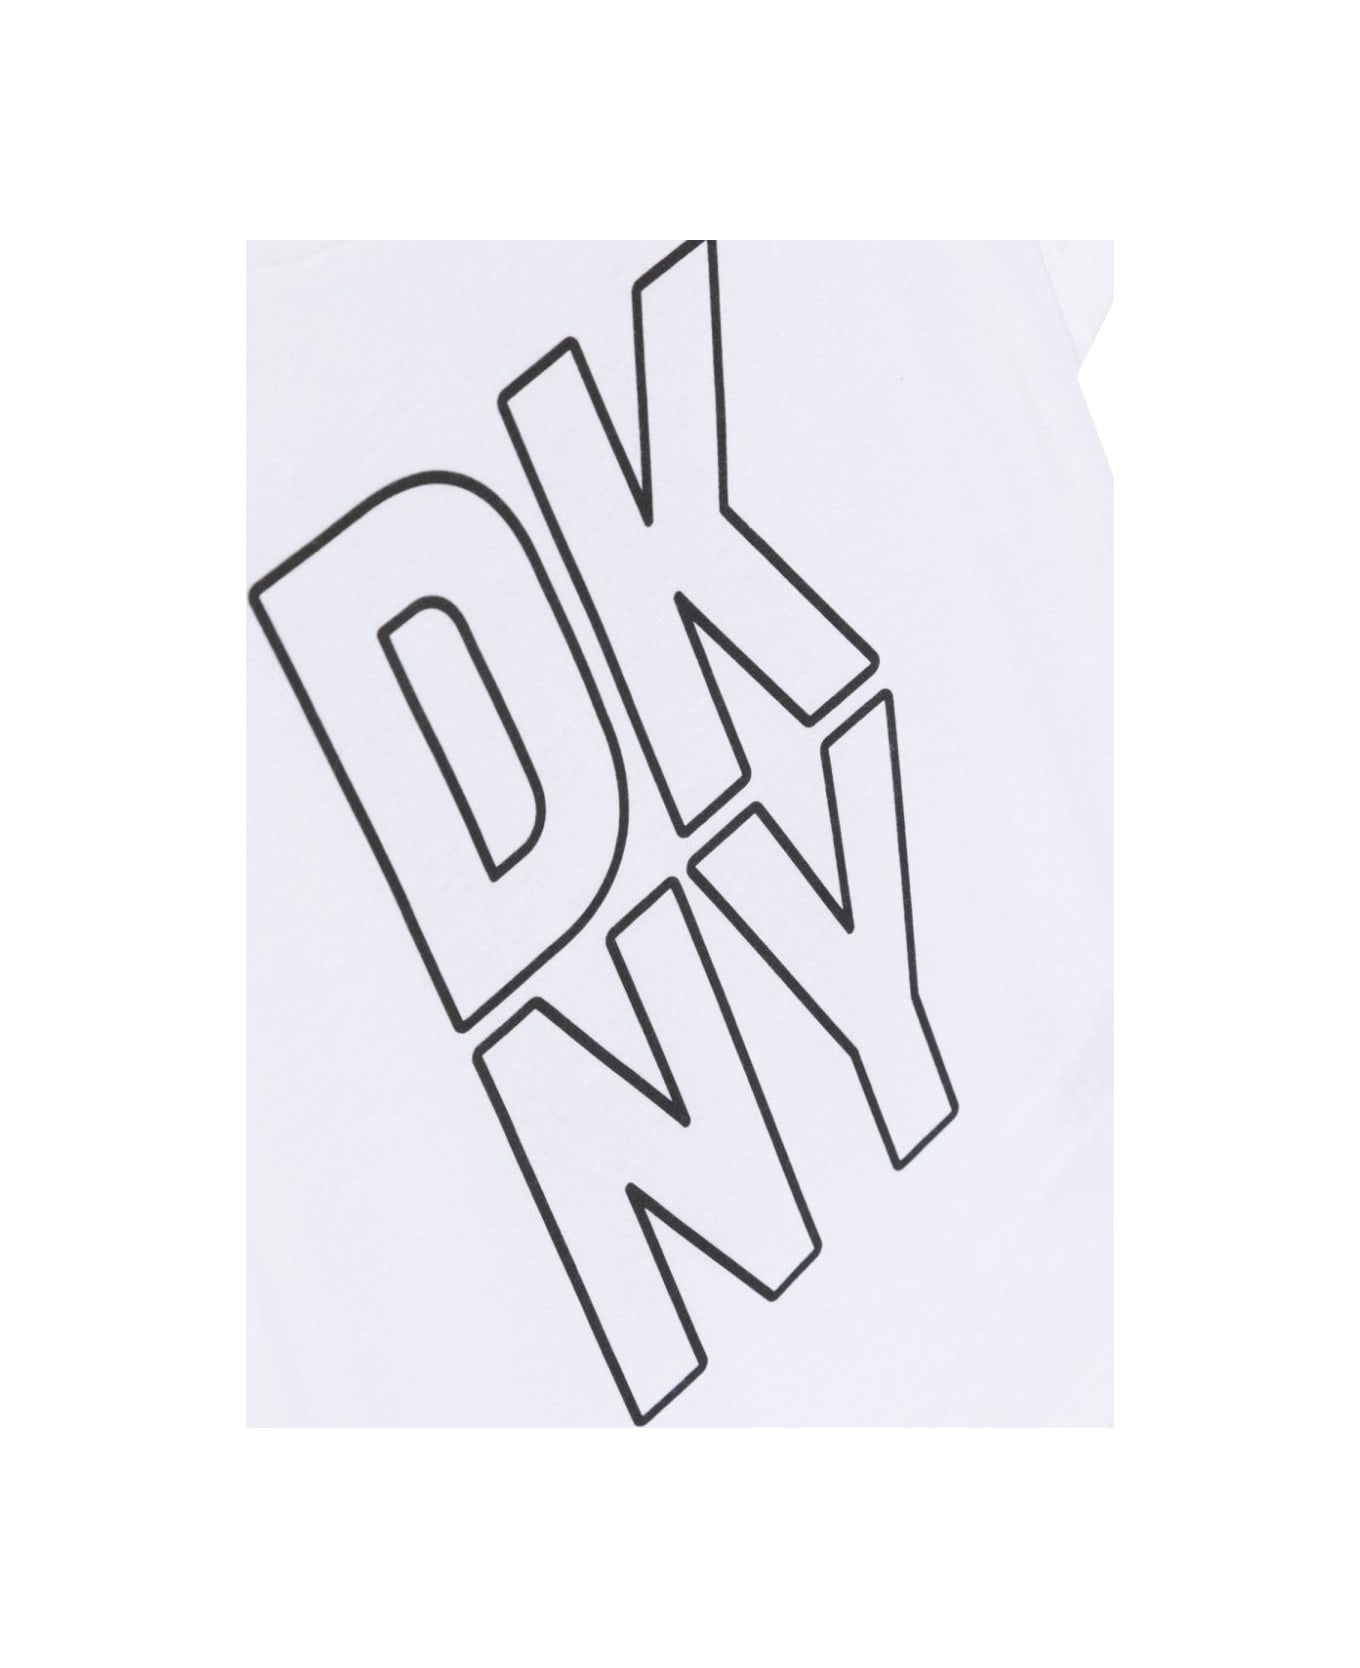 DKNY Tee Shirt - WHITE Tシャツ＆ポロシャツ